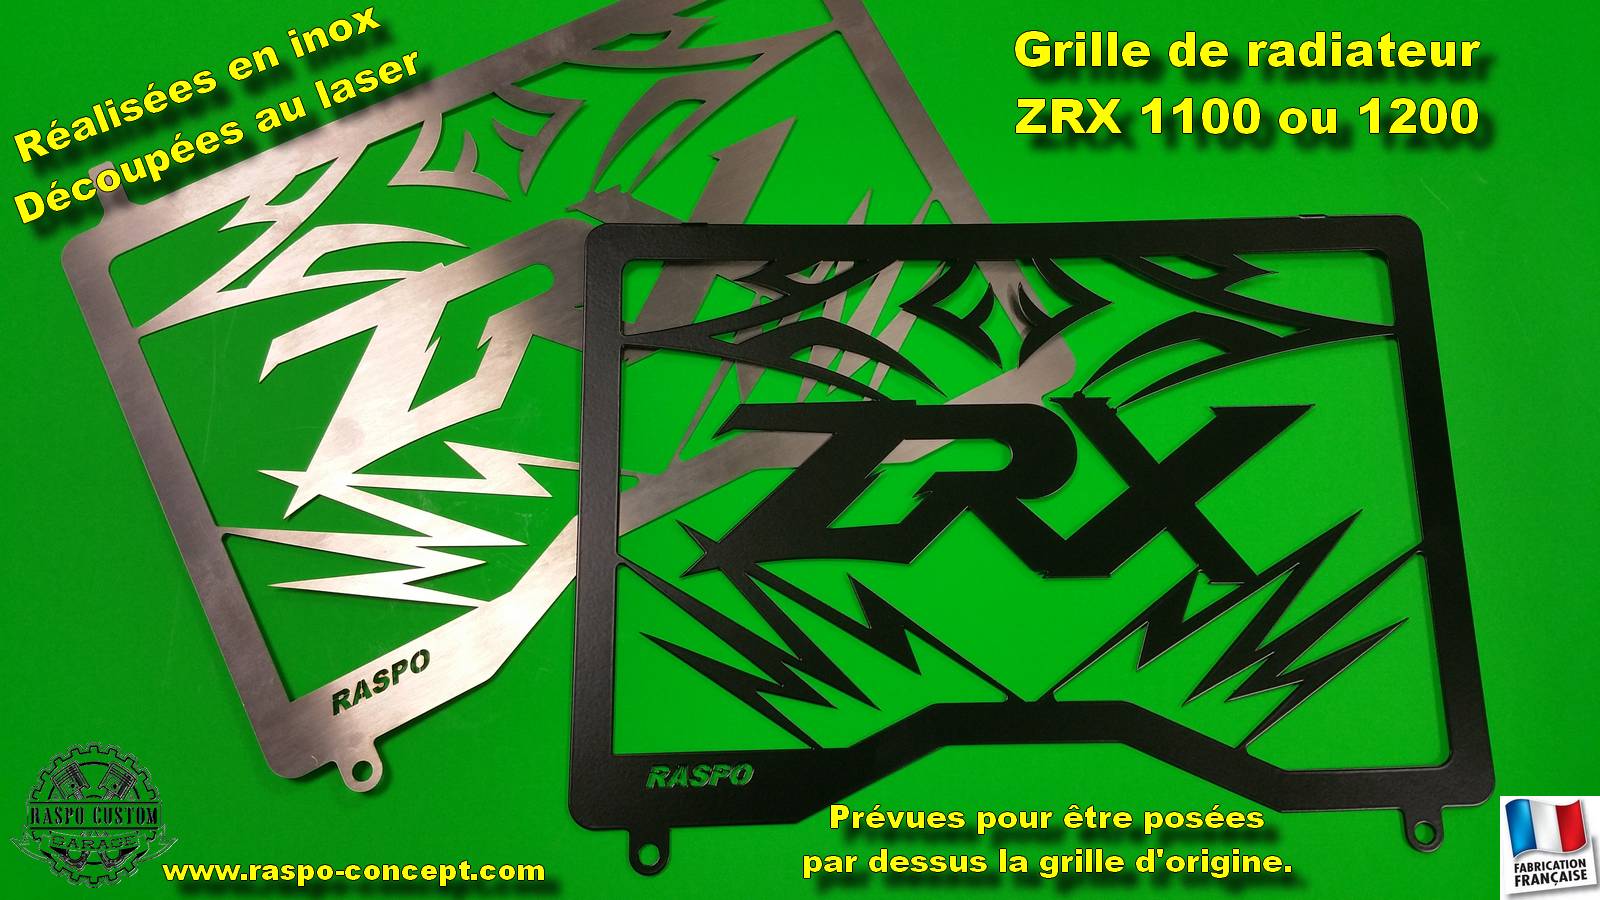 Raspo line - Grille de radiateur ZRX